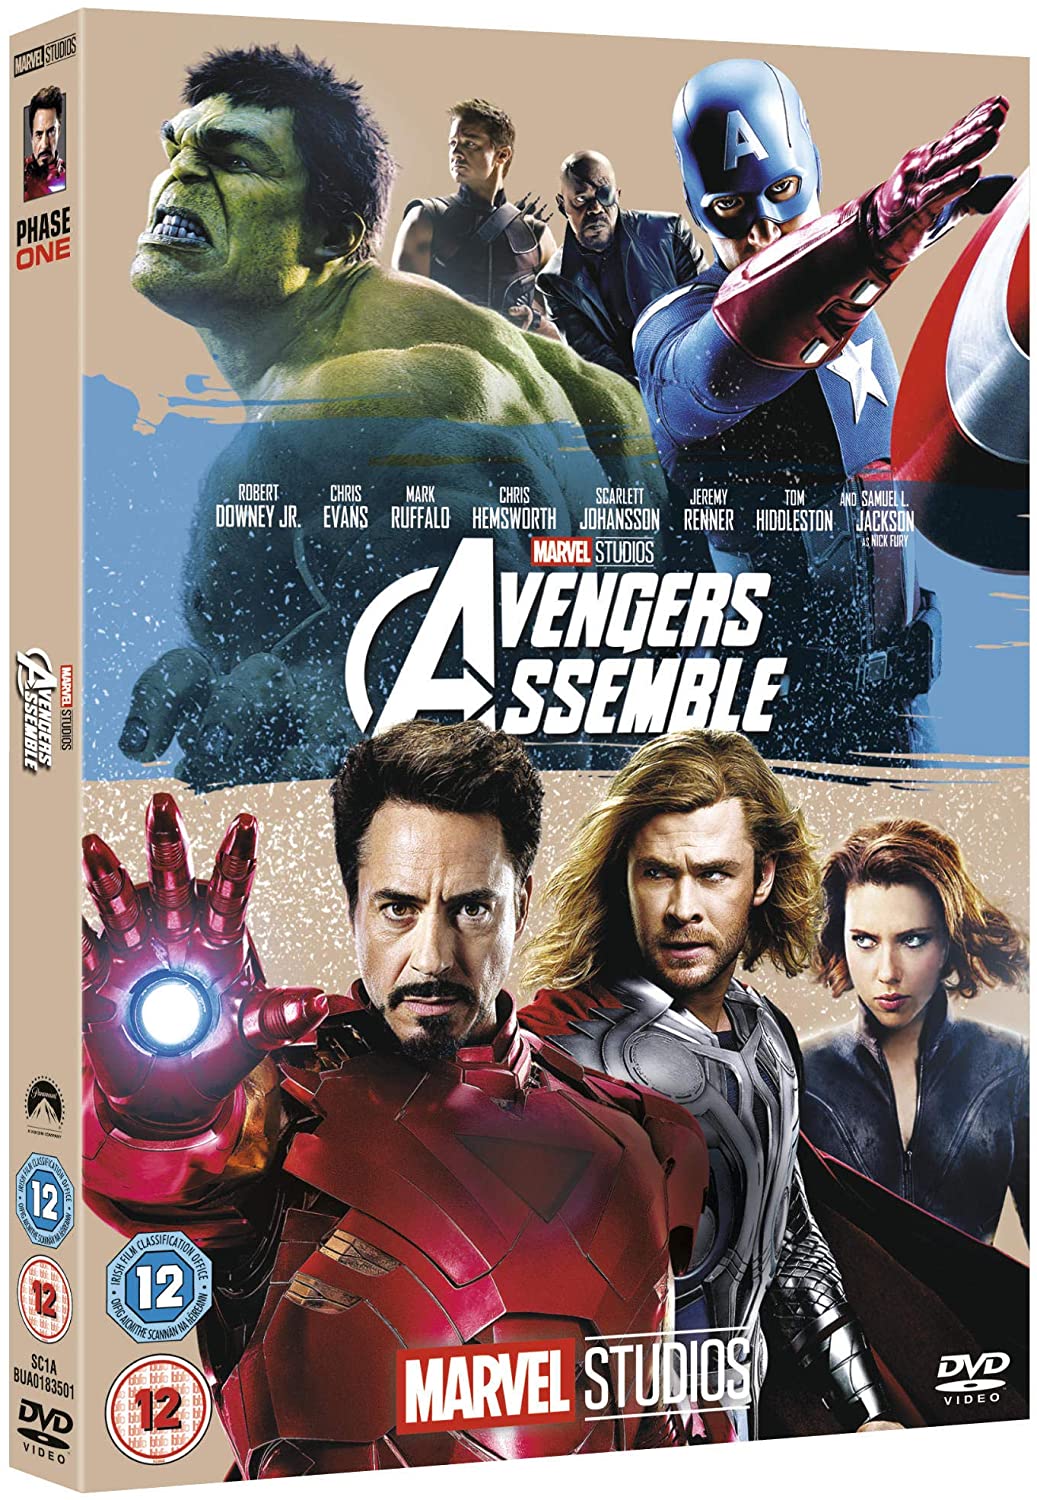 Avengers Assemble [DVD]